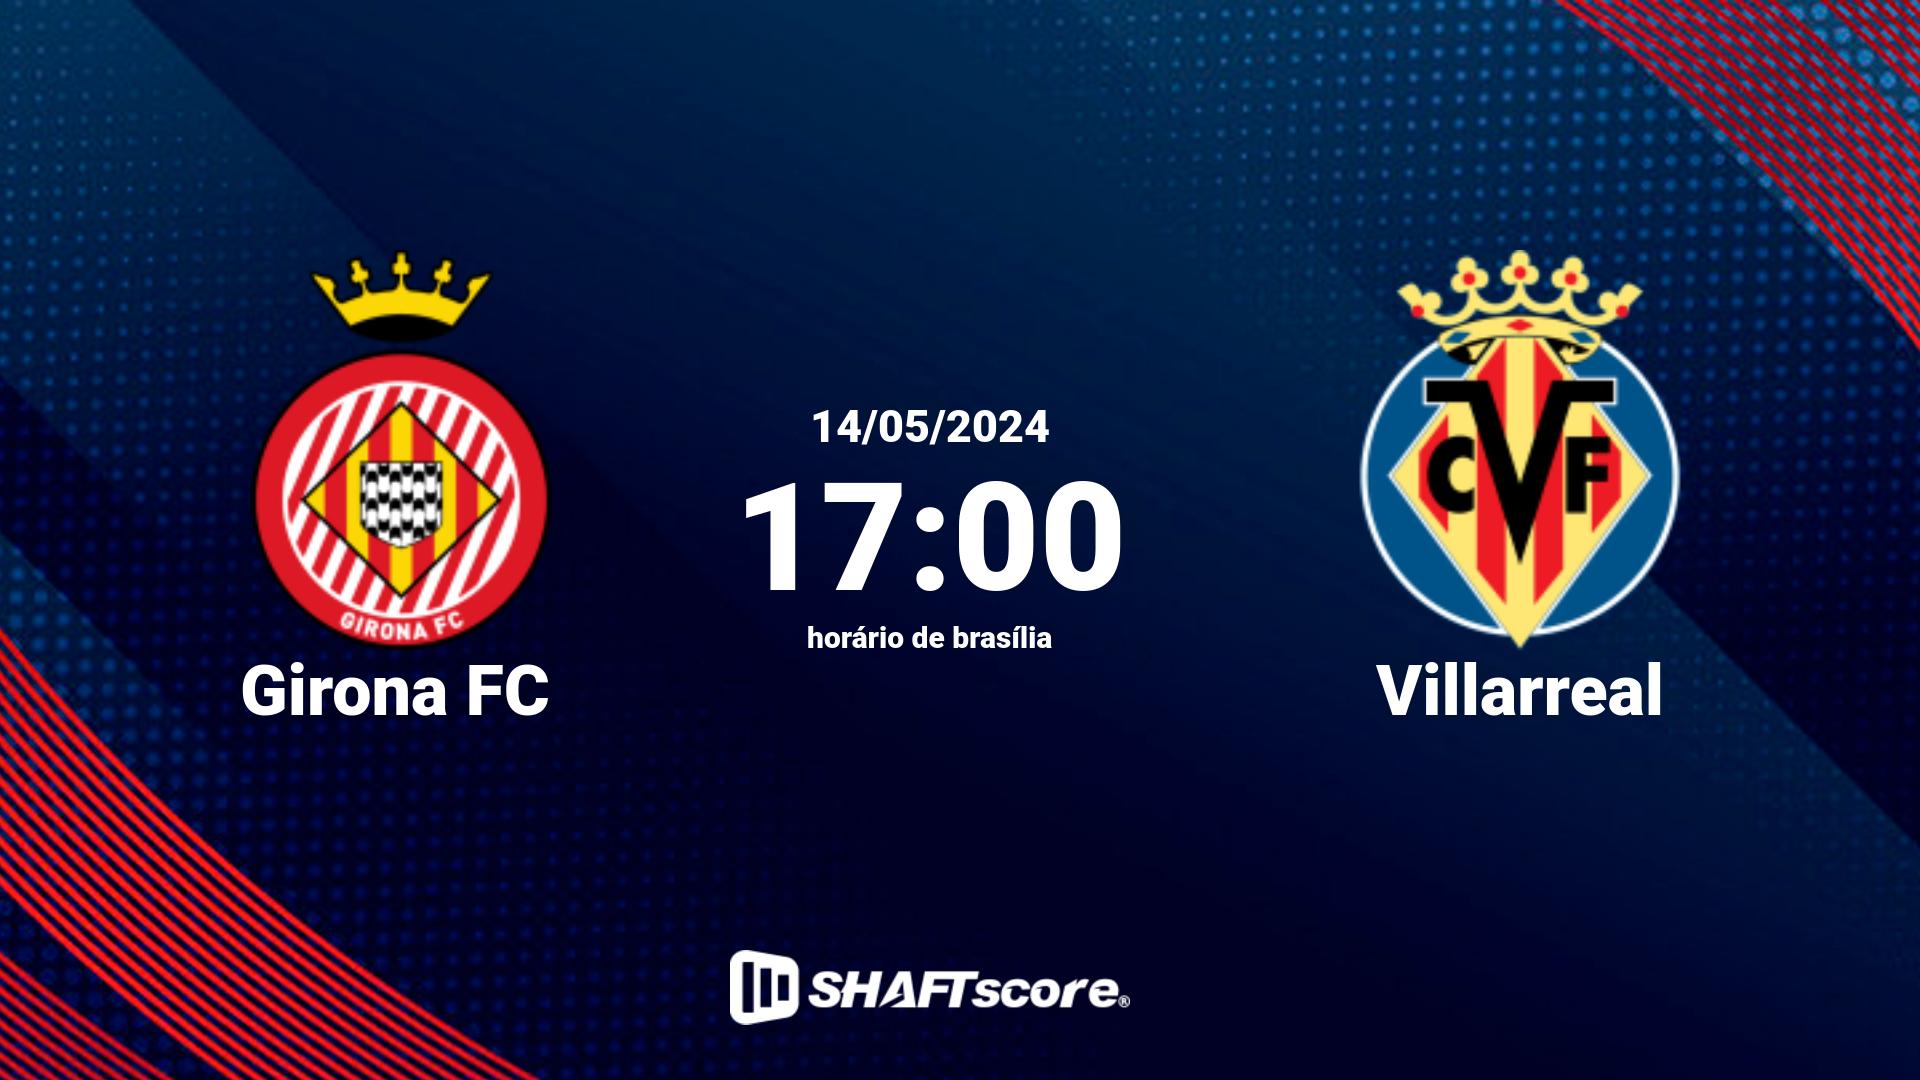 Estatísticas do jogo Girona FC vs Villarreal 14.05 17:00